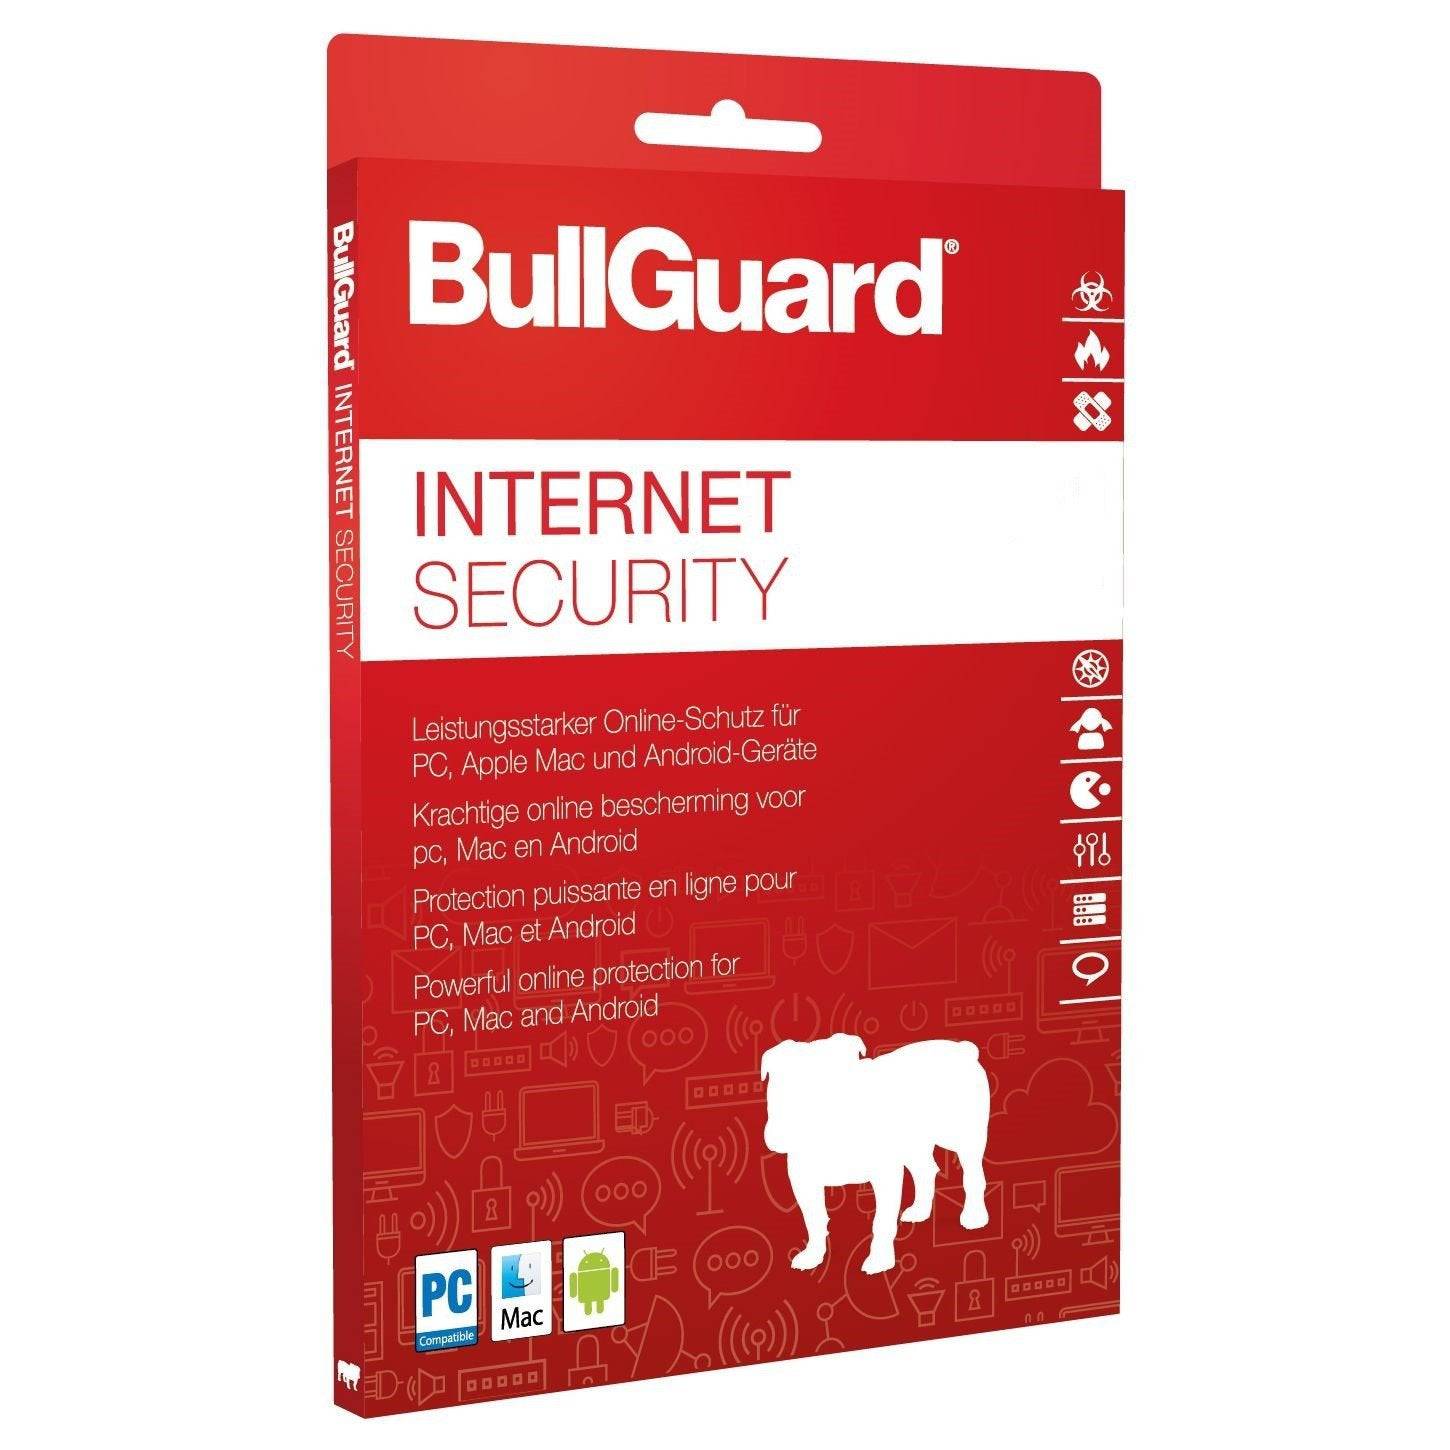 BullGuard Internet Security - Software-Dealz.de